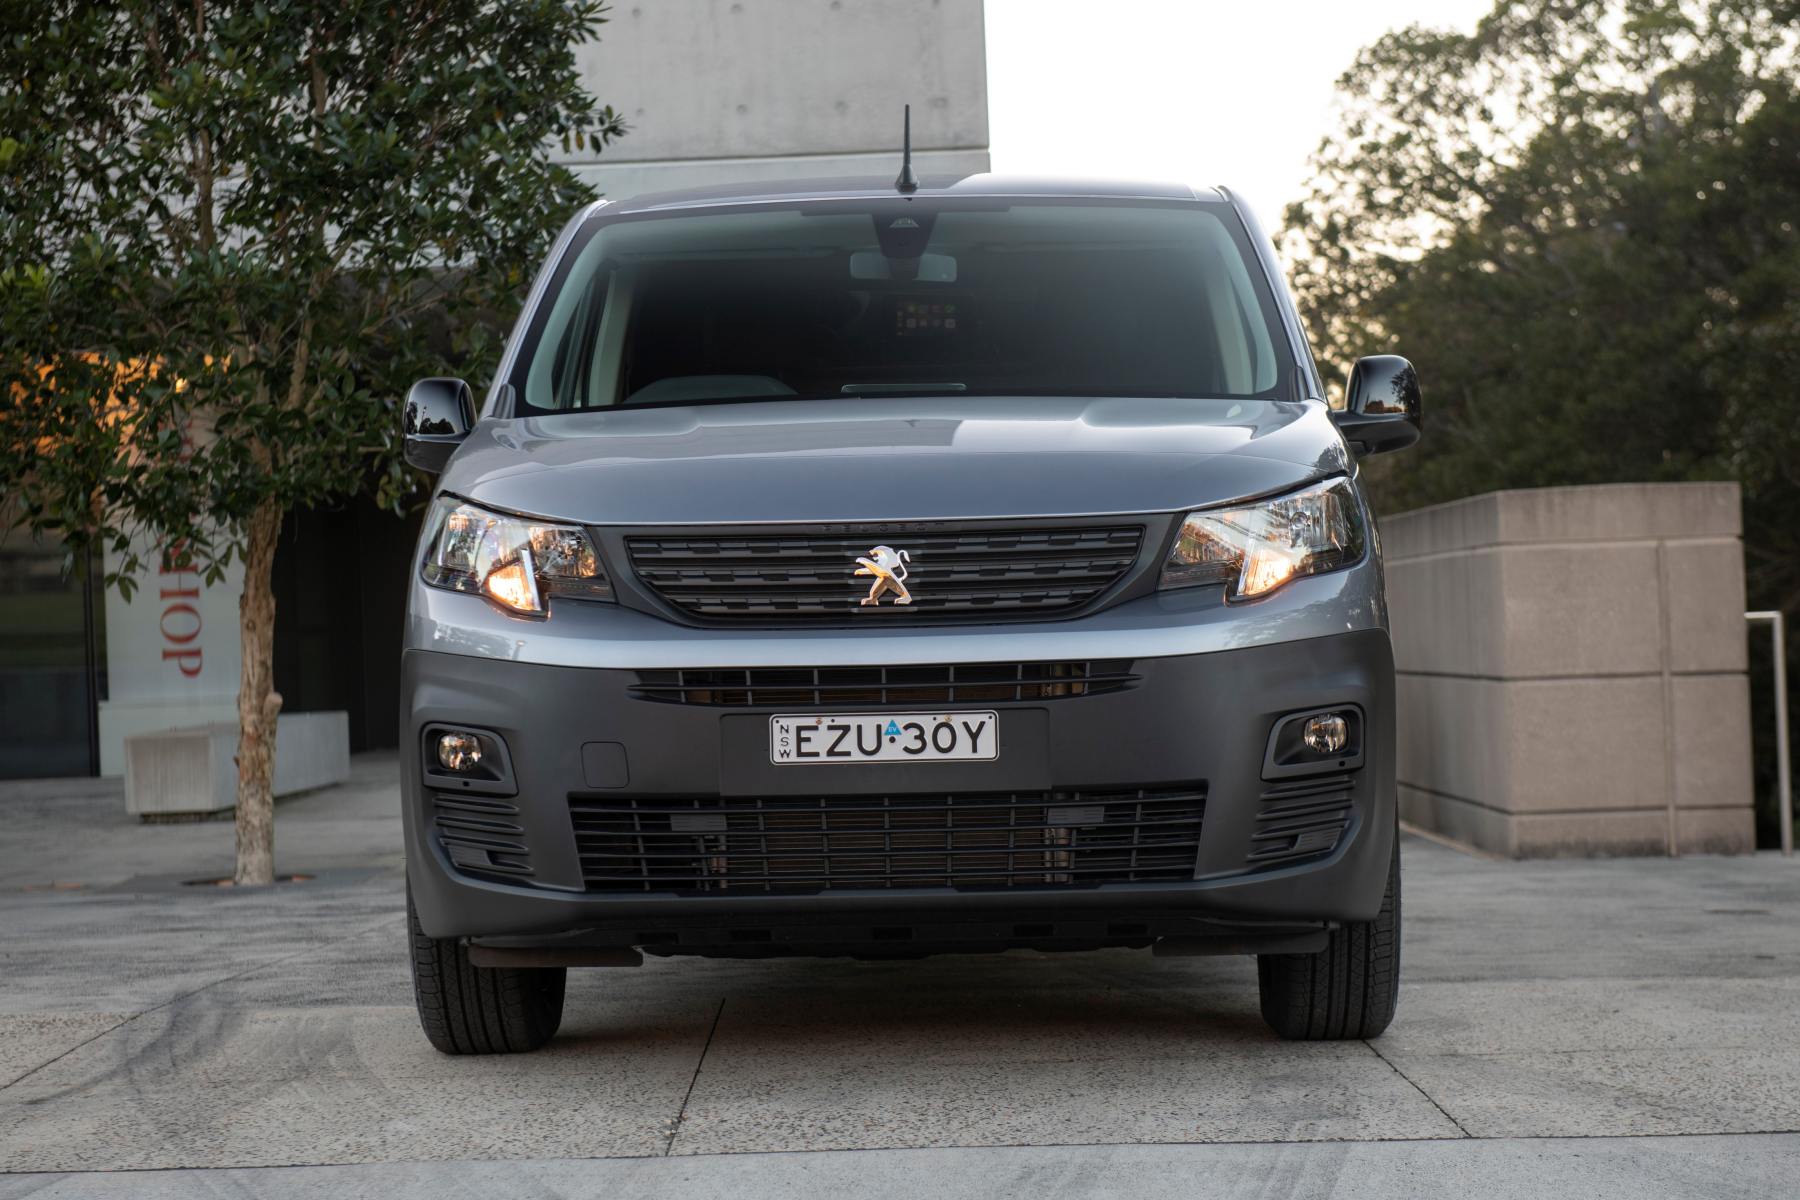 Peugeot e-Partner delivery van launch front grill